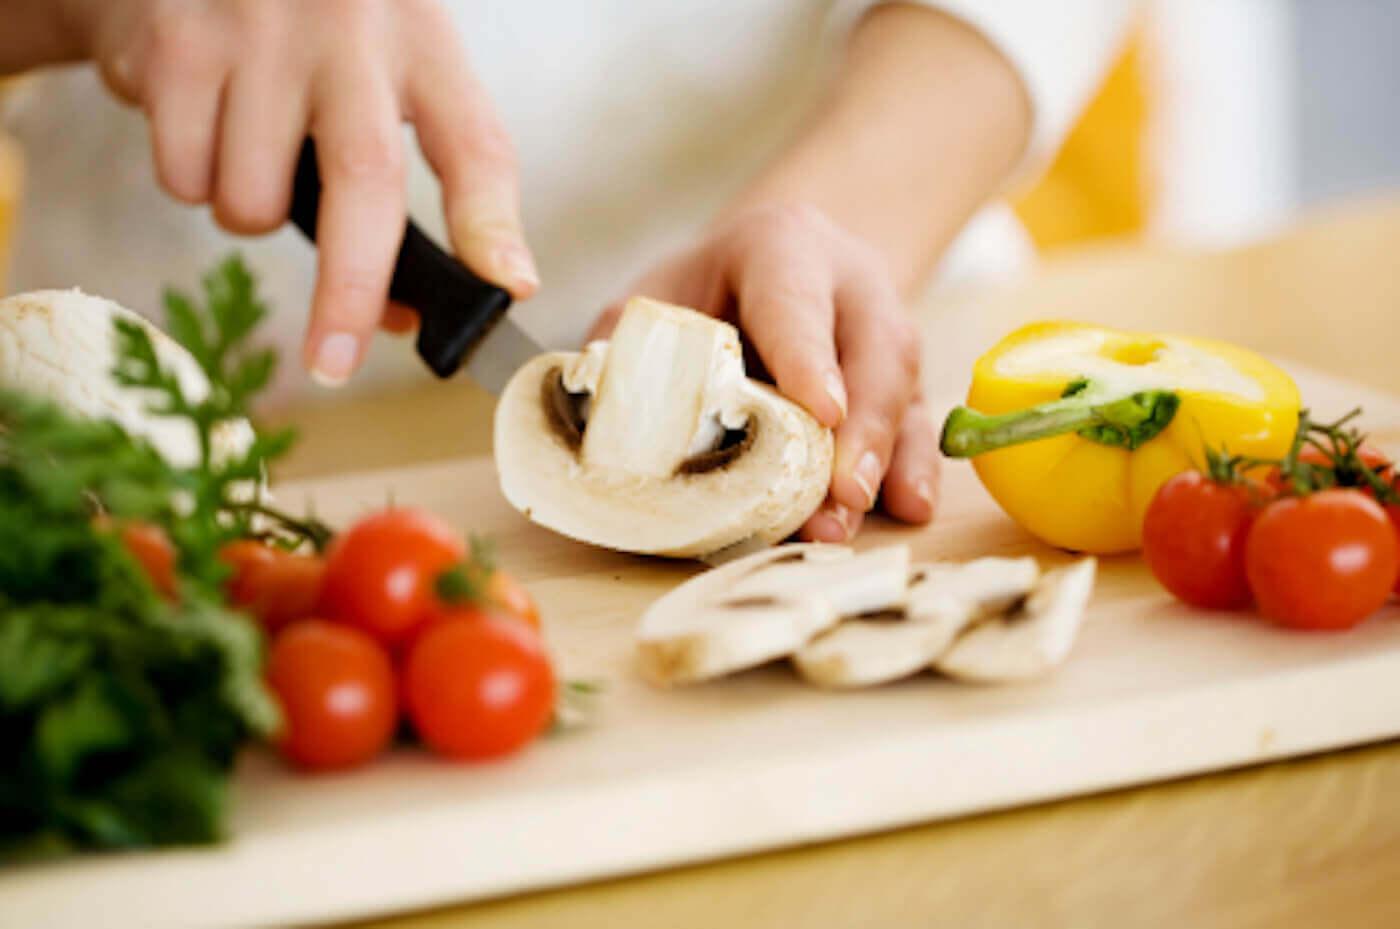 https://www.escoffier.edu/wp-content/uploads/2021/09/Chef-slicing-a-mushroom-with-a-knife.jpg